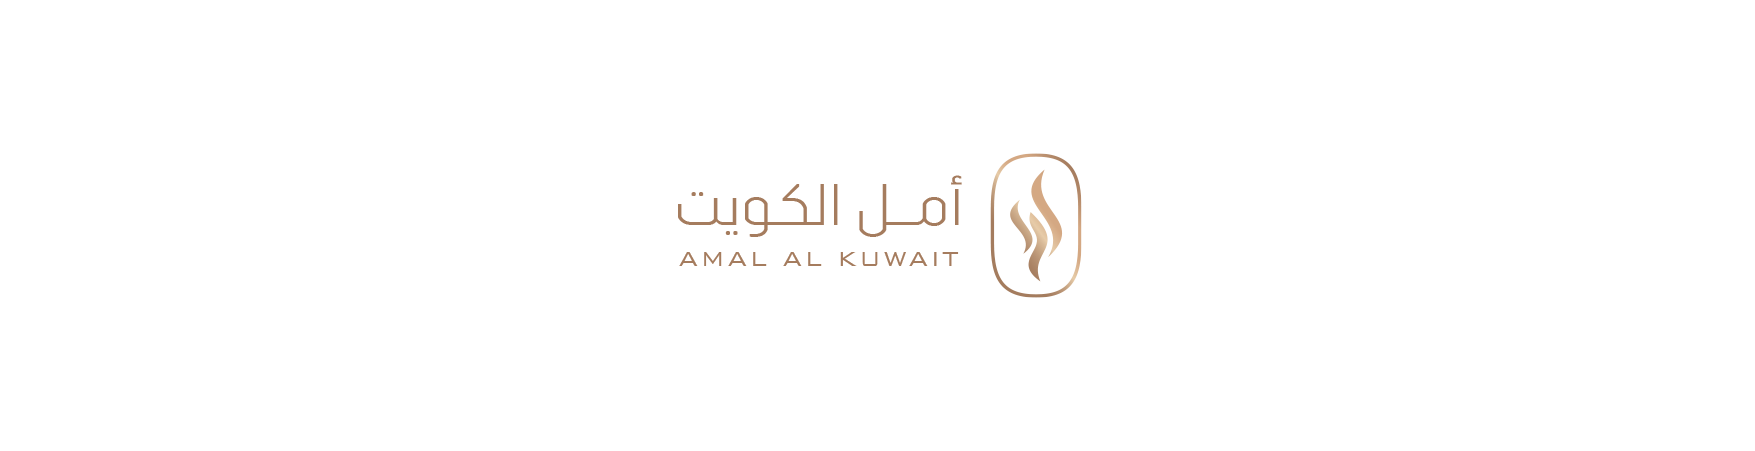 Amal Al Kuwait